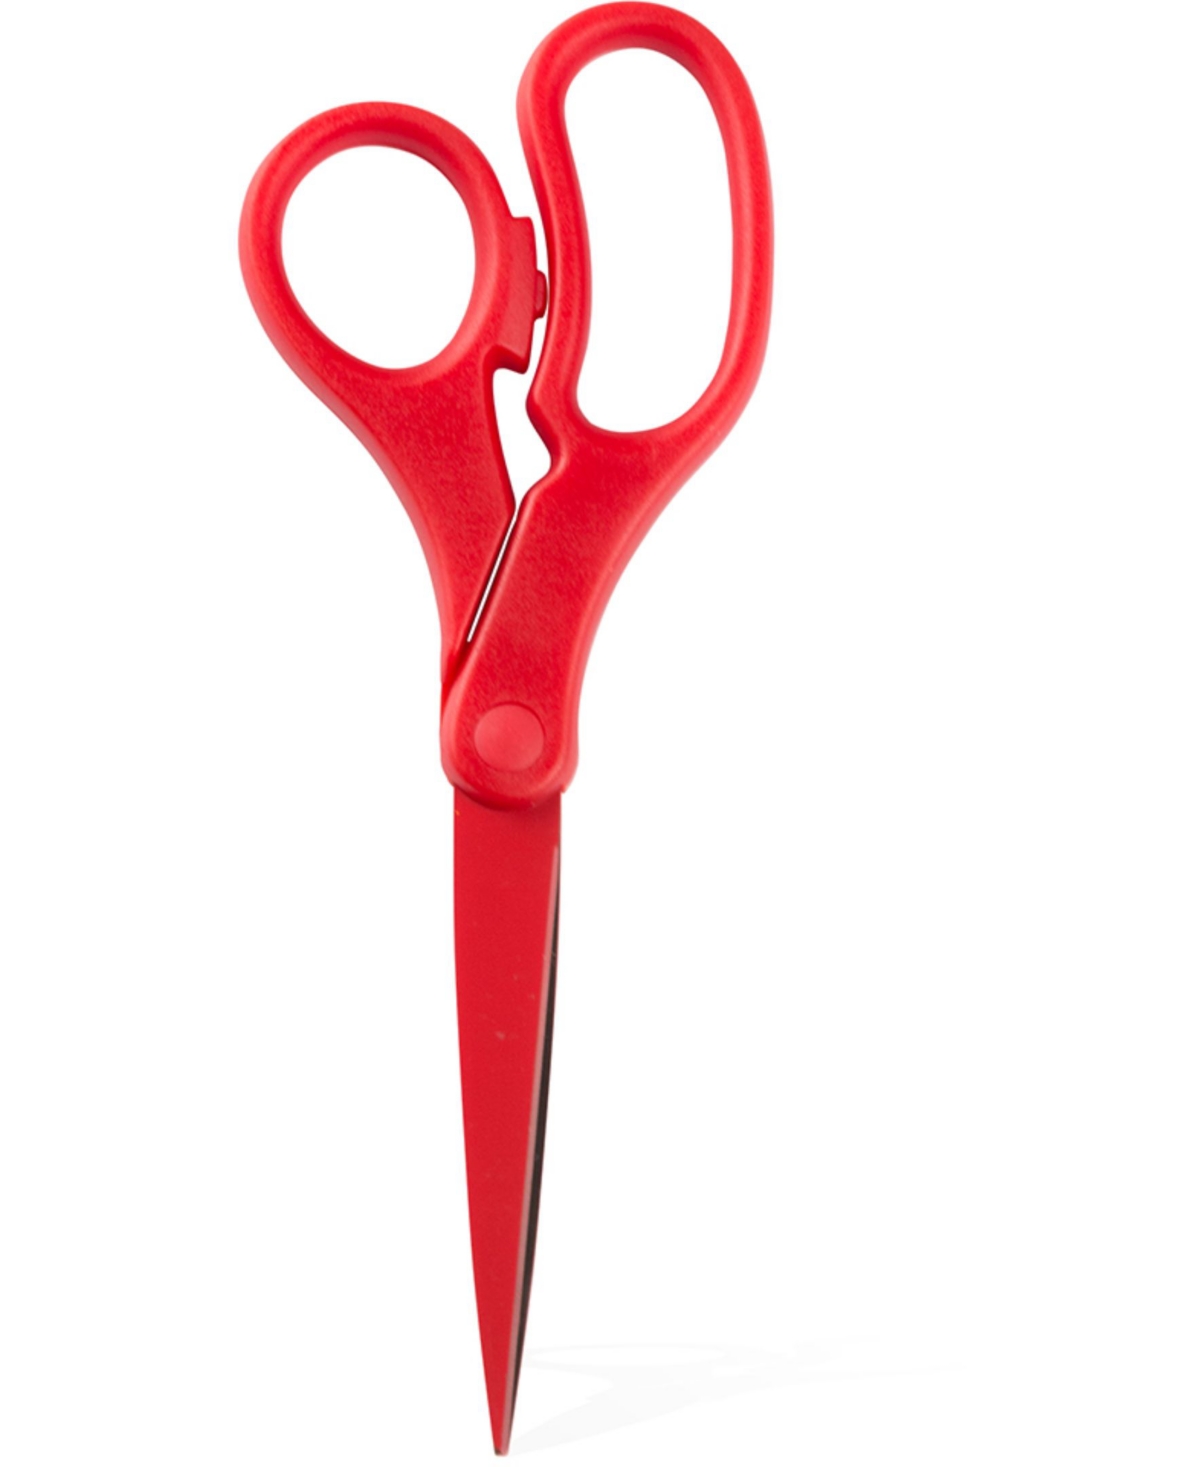 Multi-Purpose Precision Scissors - 8" - Ergonomic Handle Stainless Steel Blades - Sold Individually - Red